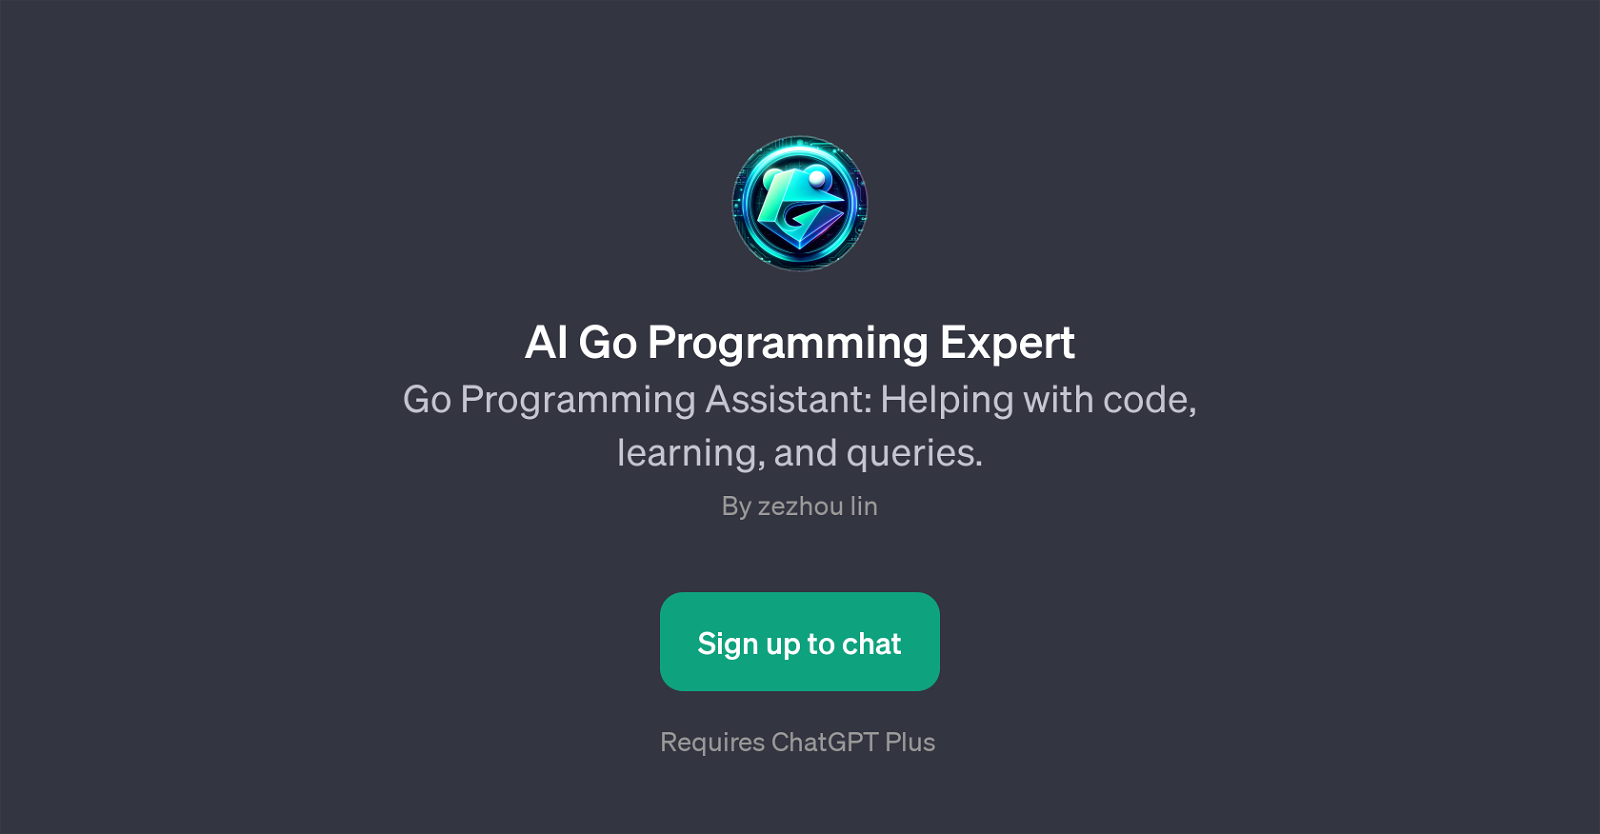 AI Go Programming Expert website